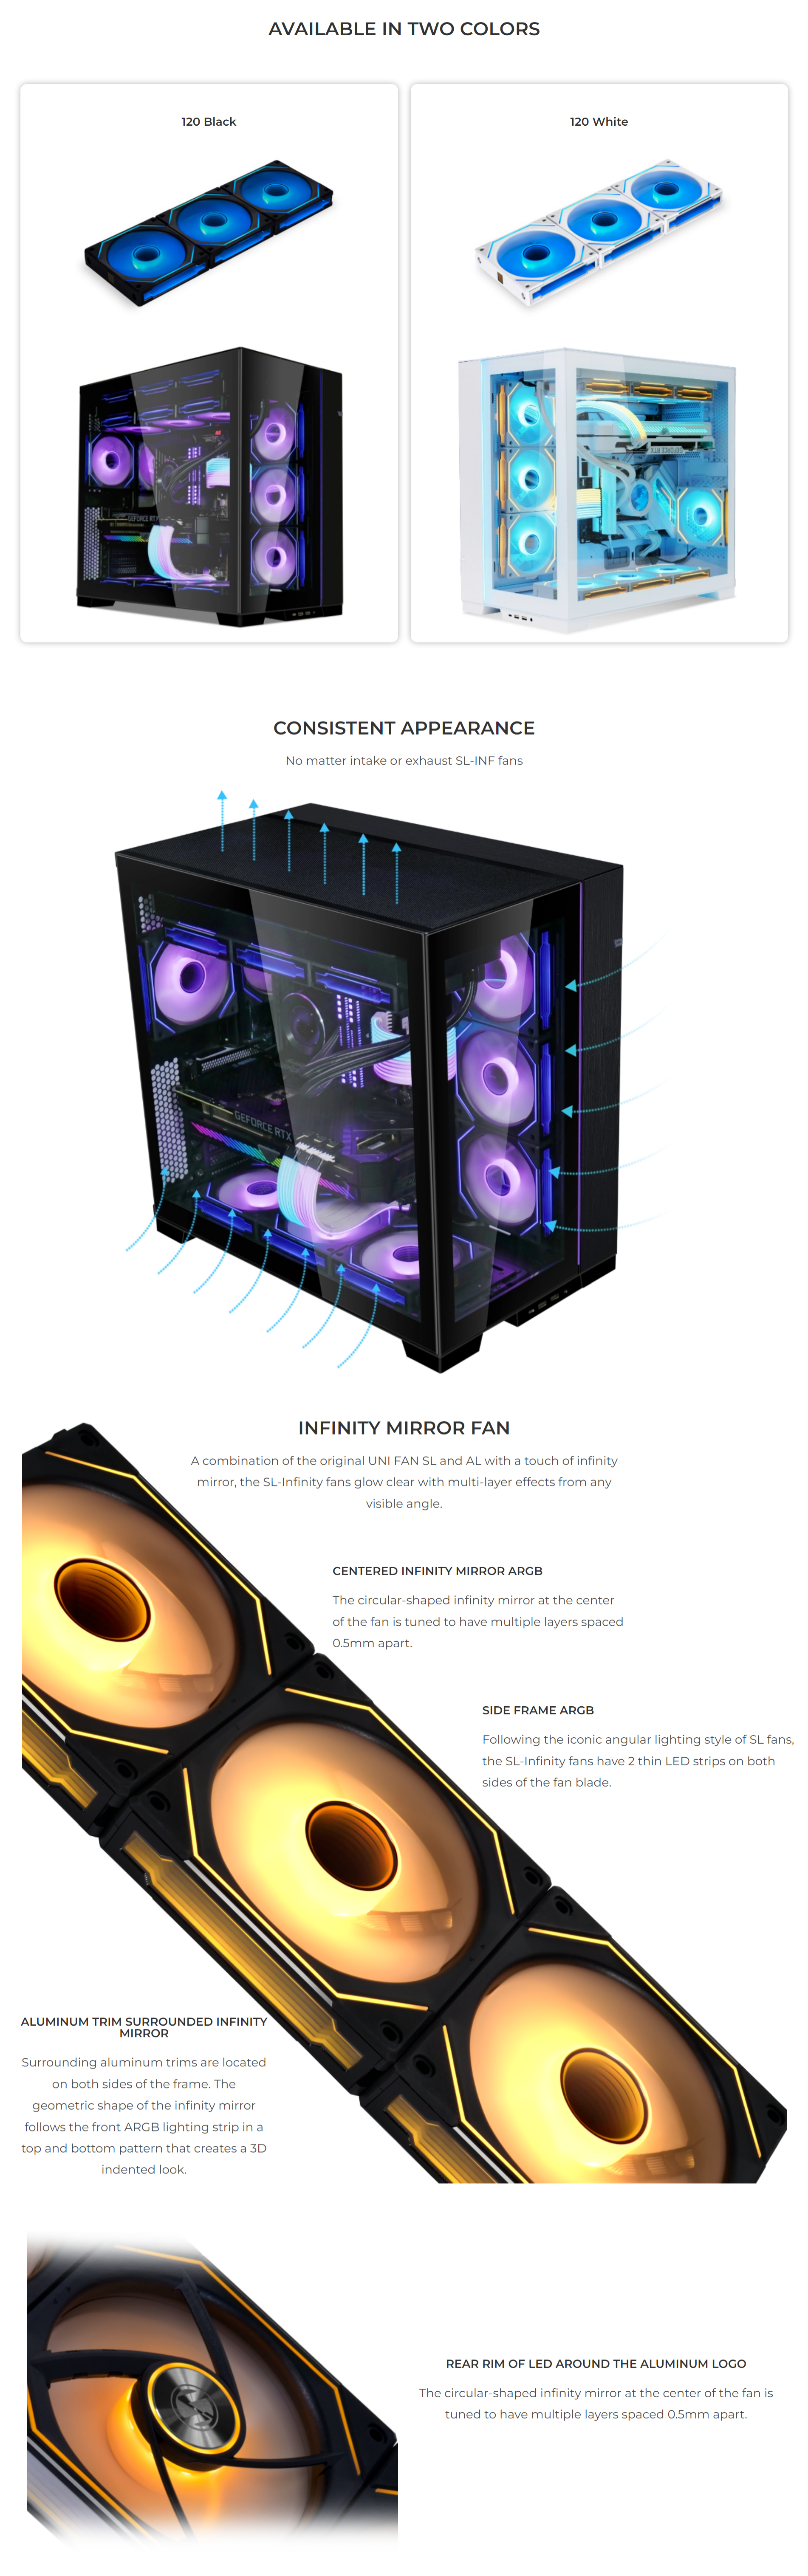 A large marketing image providing additional information about the product Lian Li UNI Fan SL120 Infinity 120mm Reverse Blade Fan Single Pack - Black - Additional alt info not provided